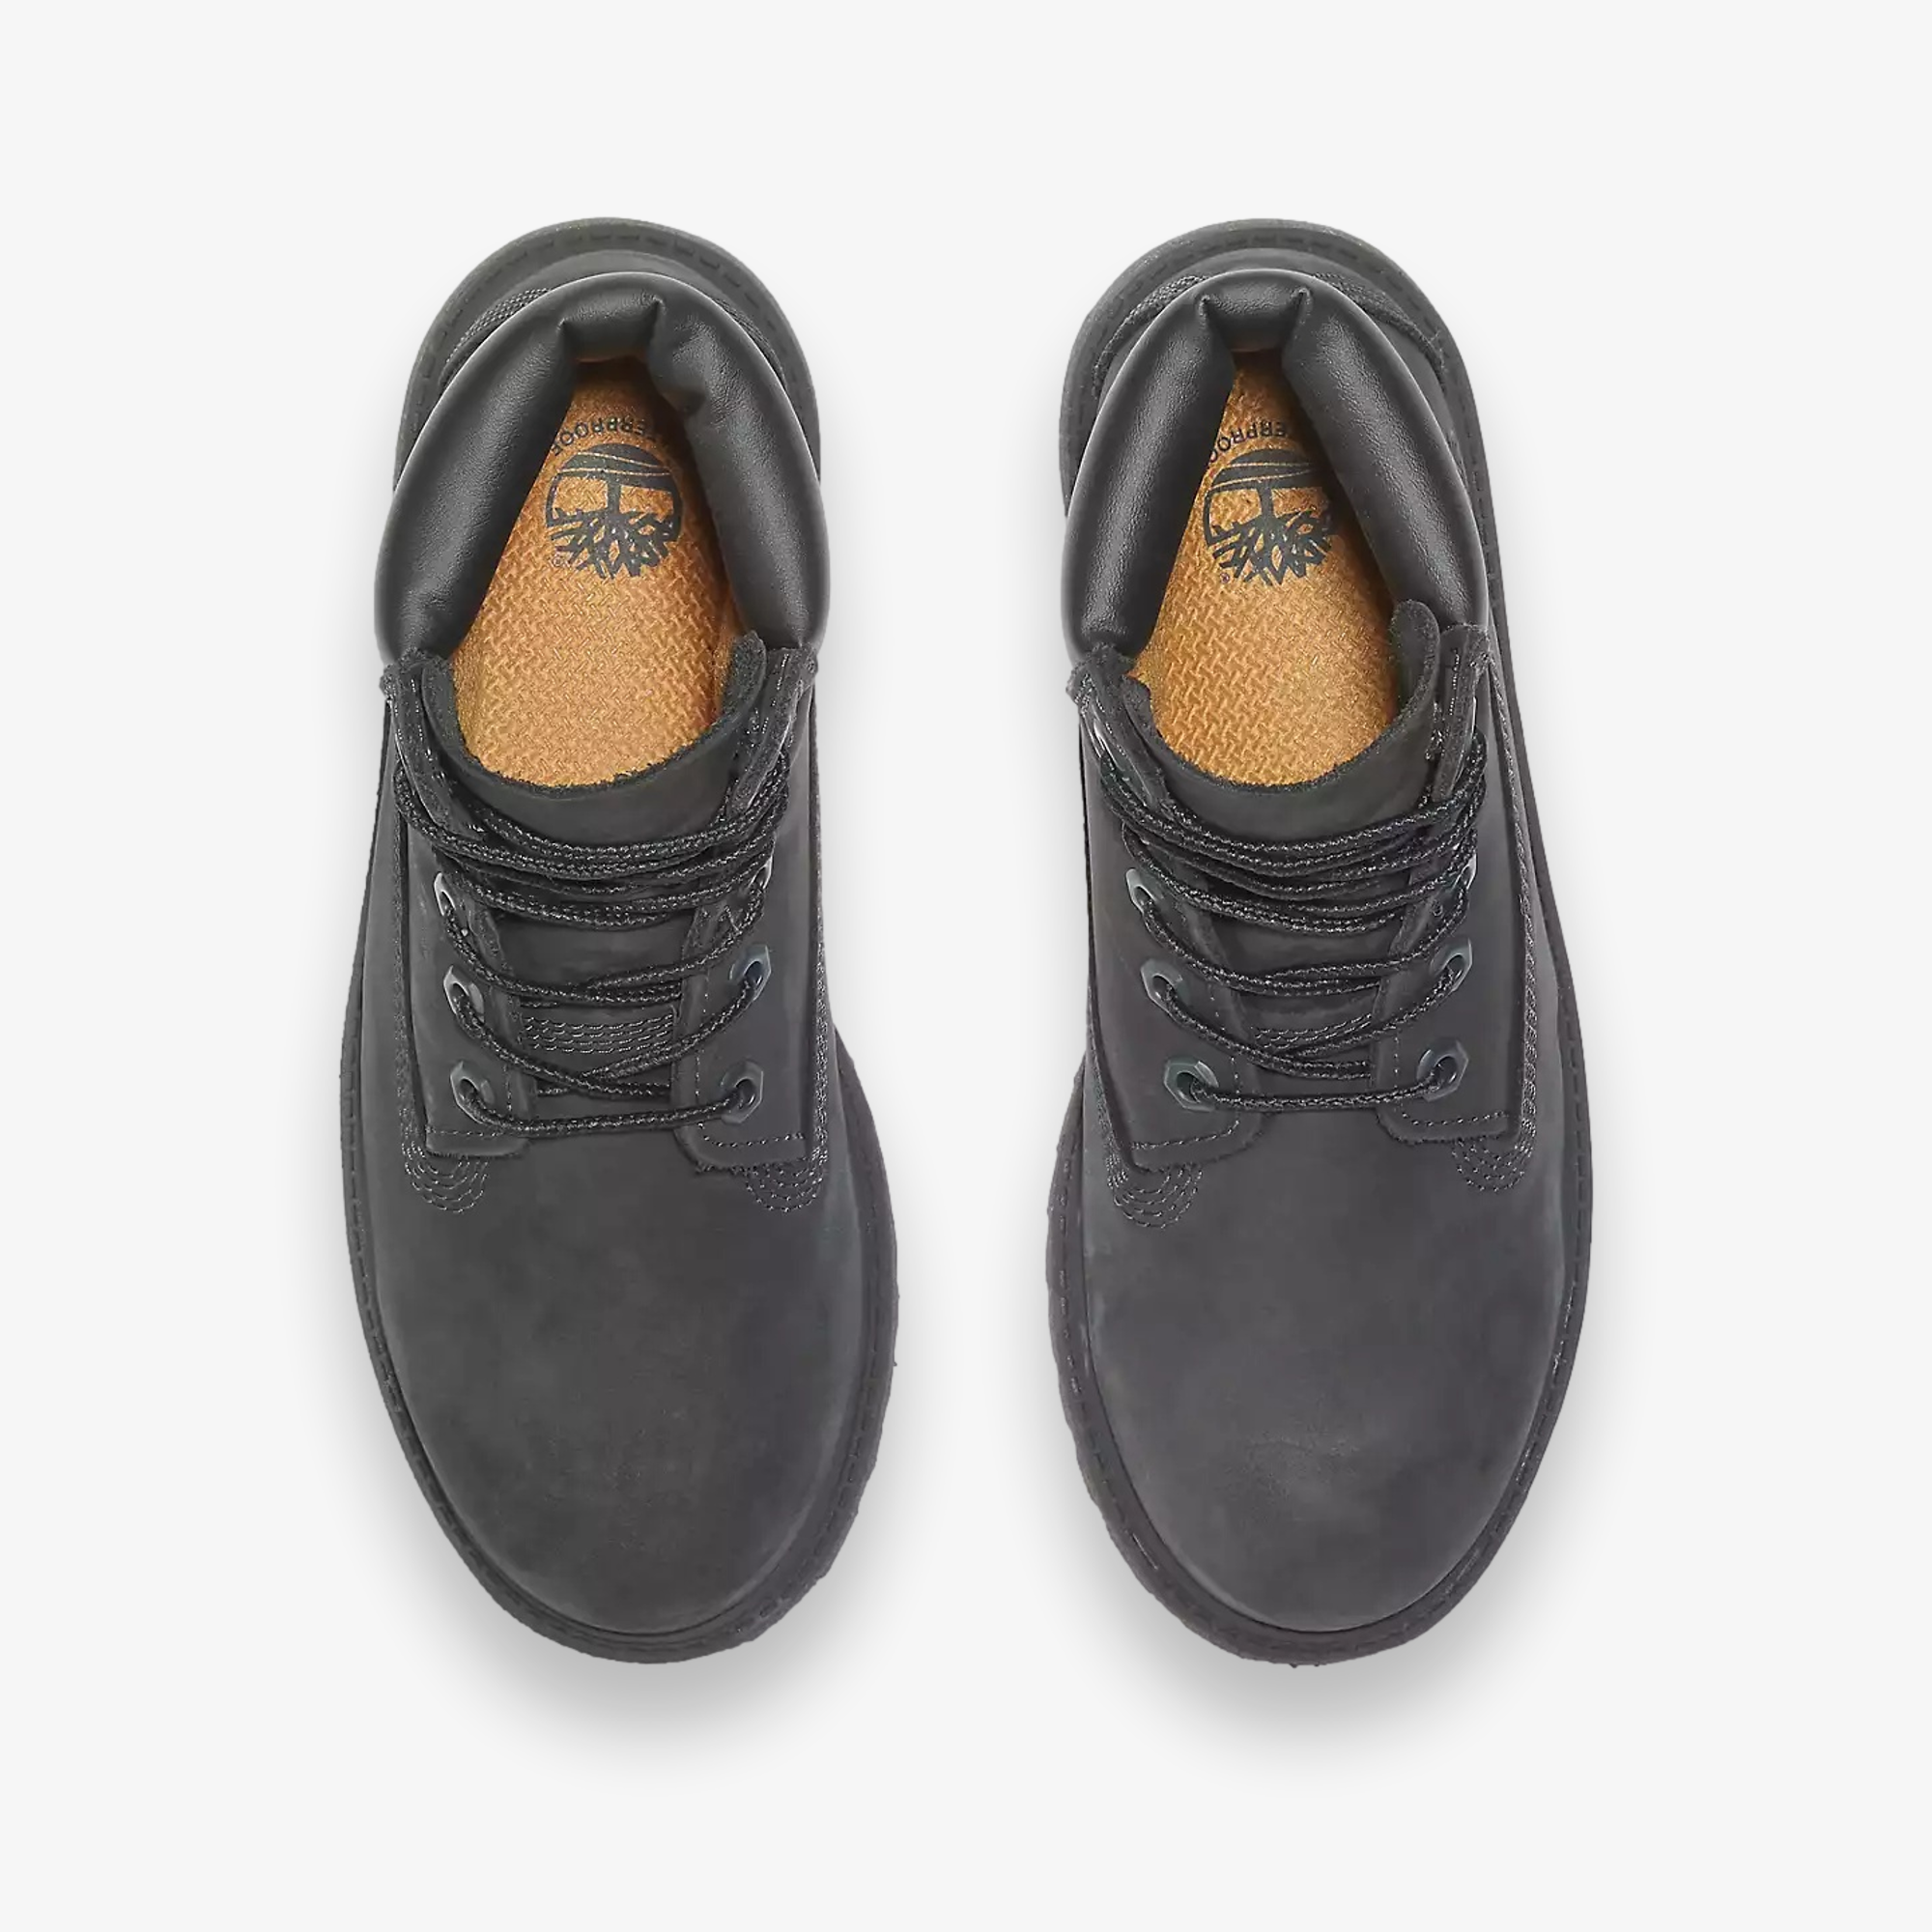 Premium 6-Inch Waterproof Boots Black GS